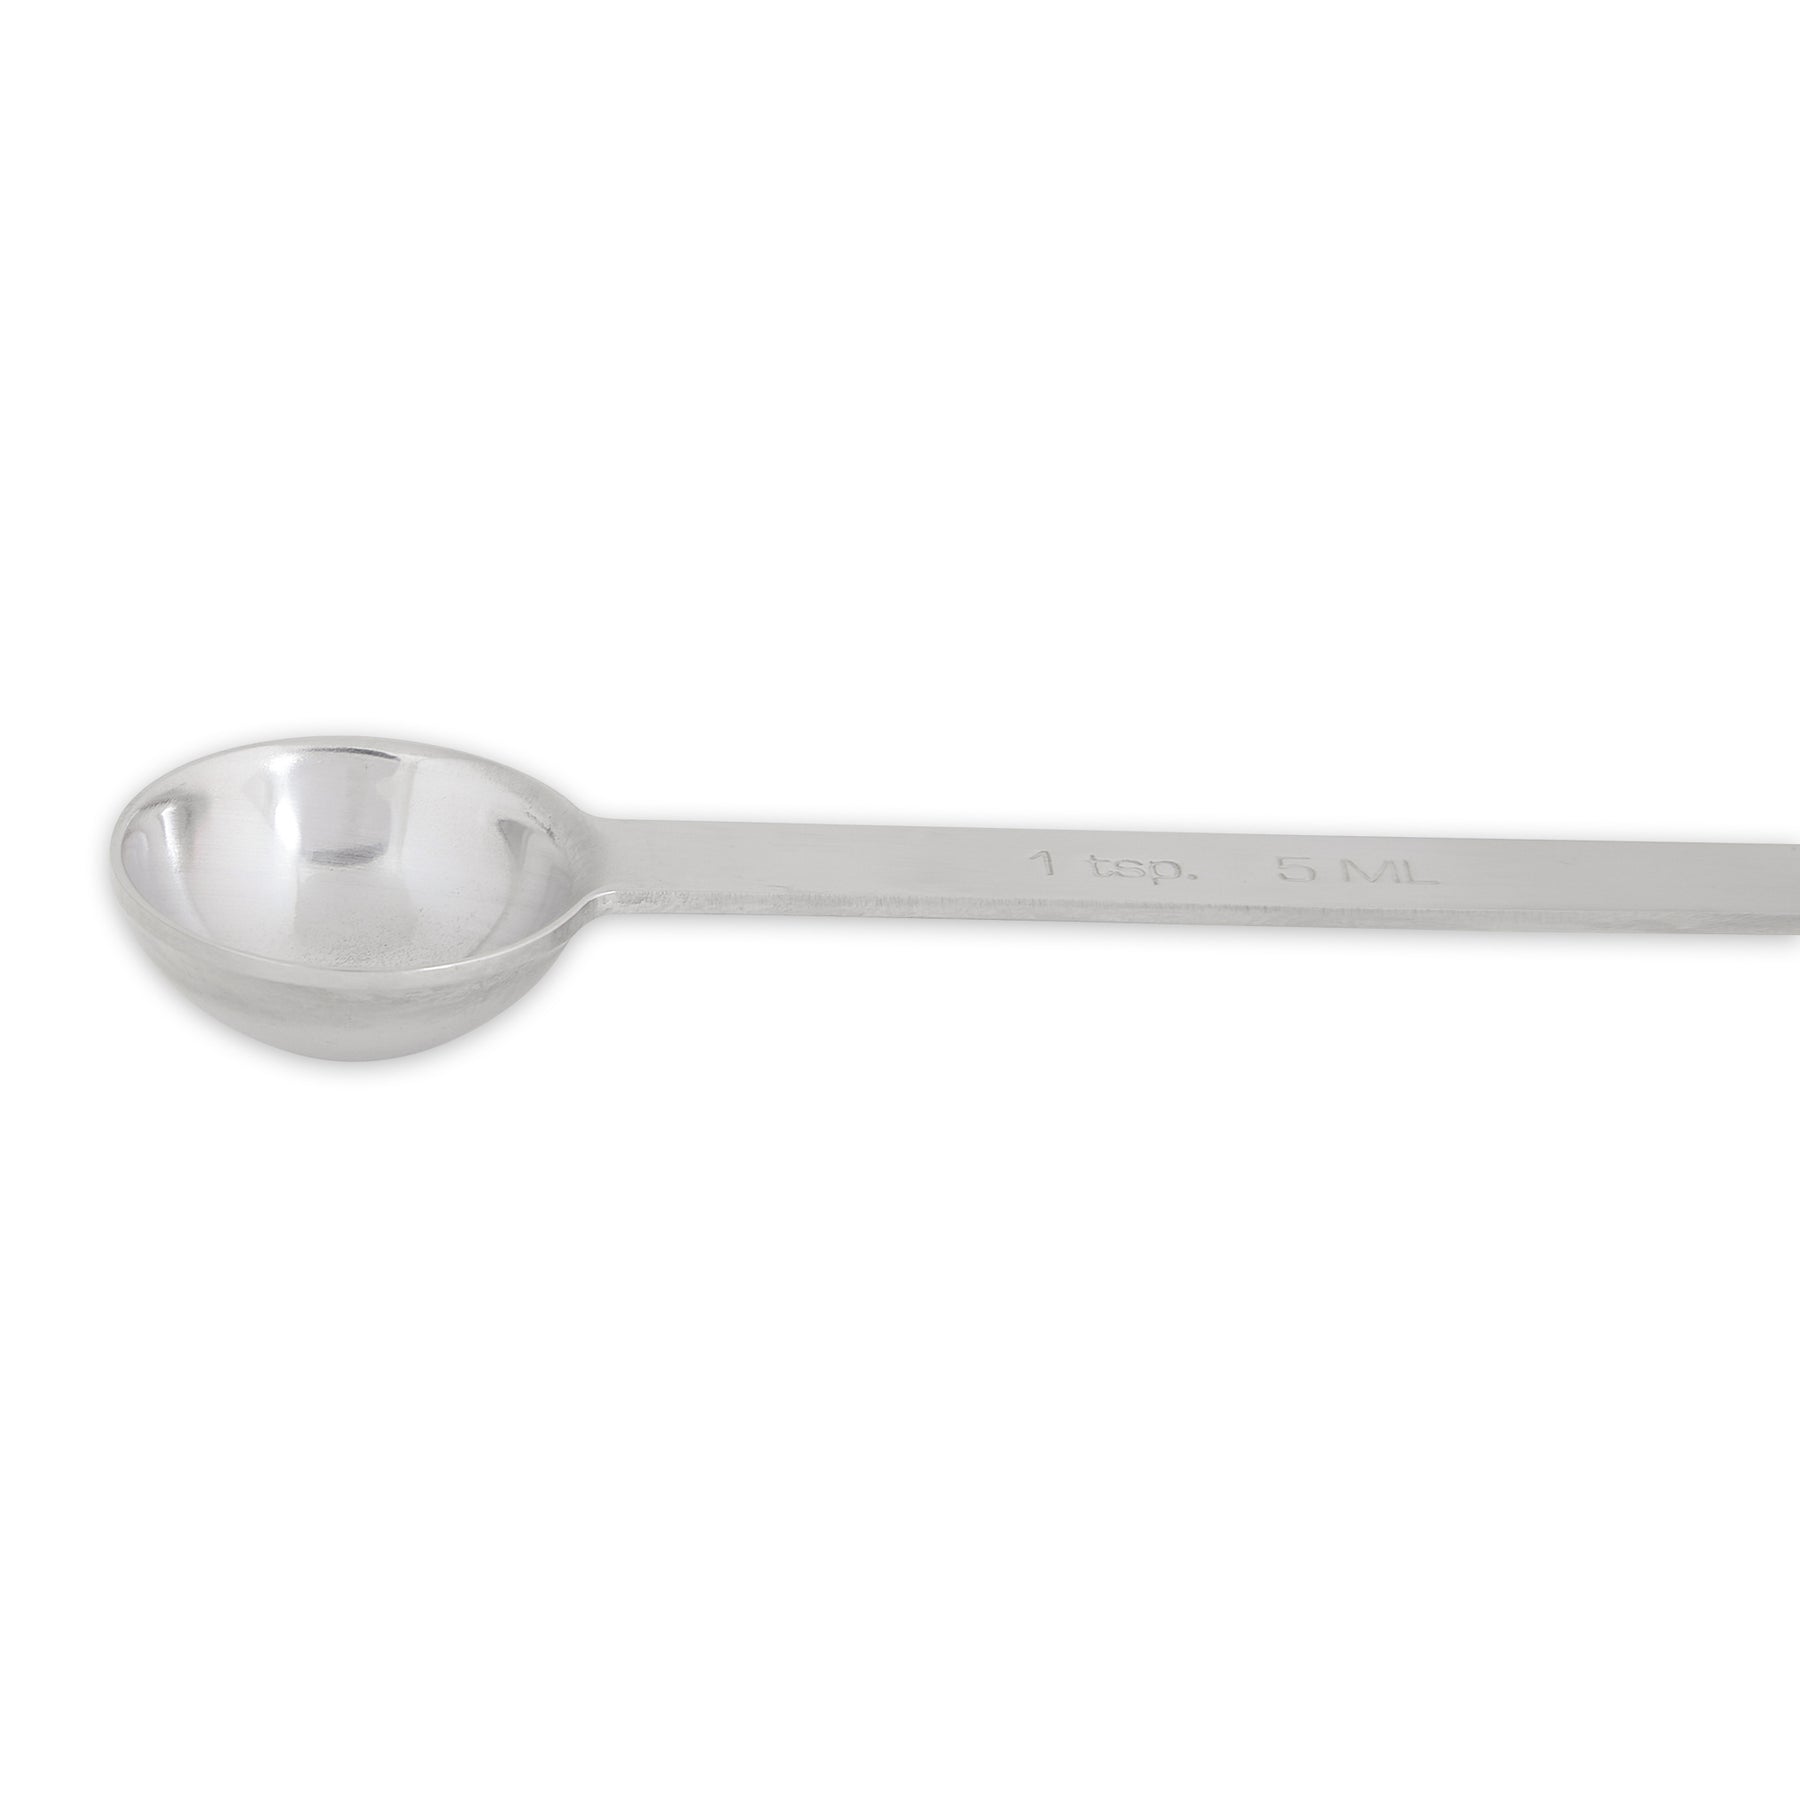 RSVP International Measuring Spoon - 1 .5 Tbl.